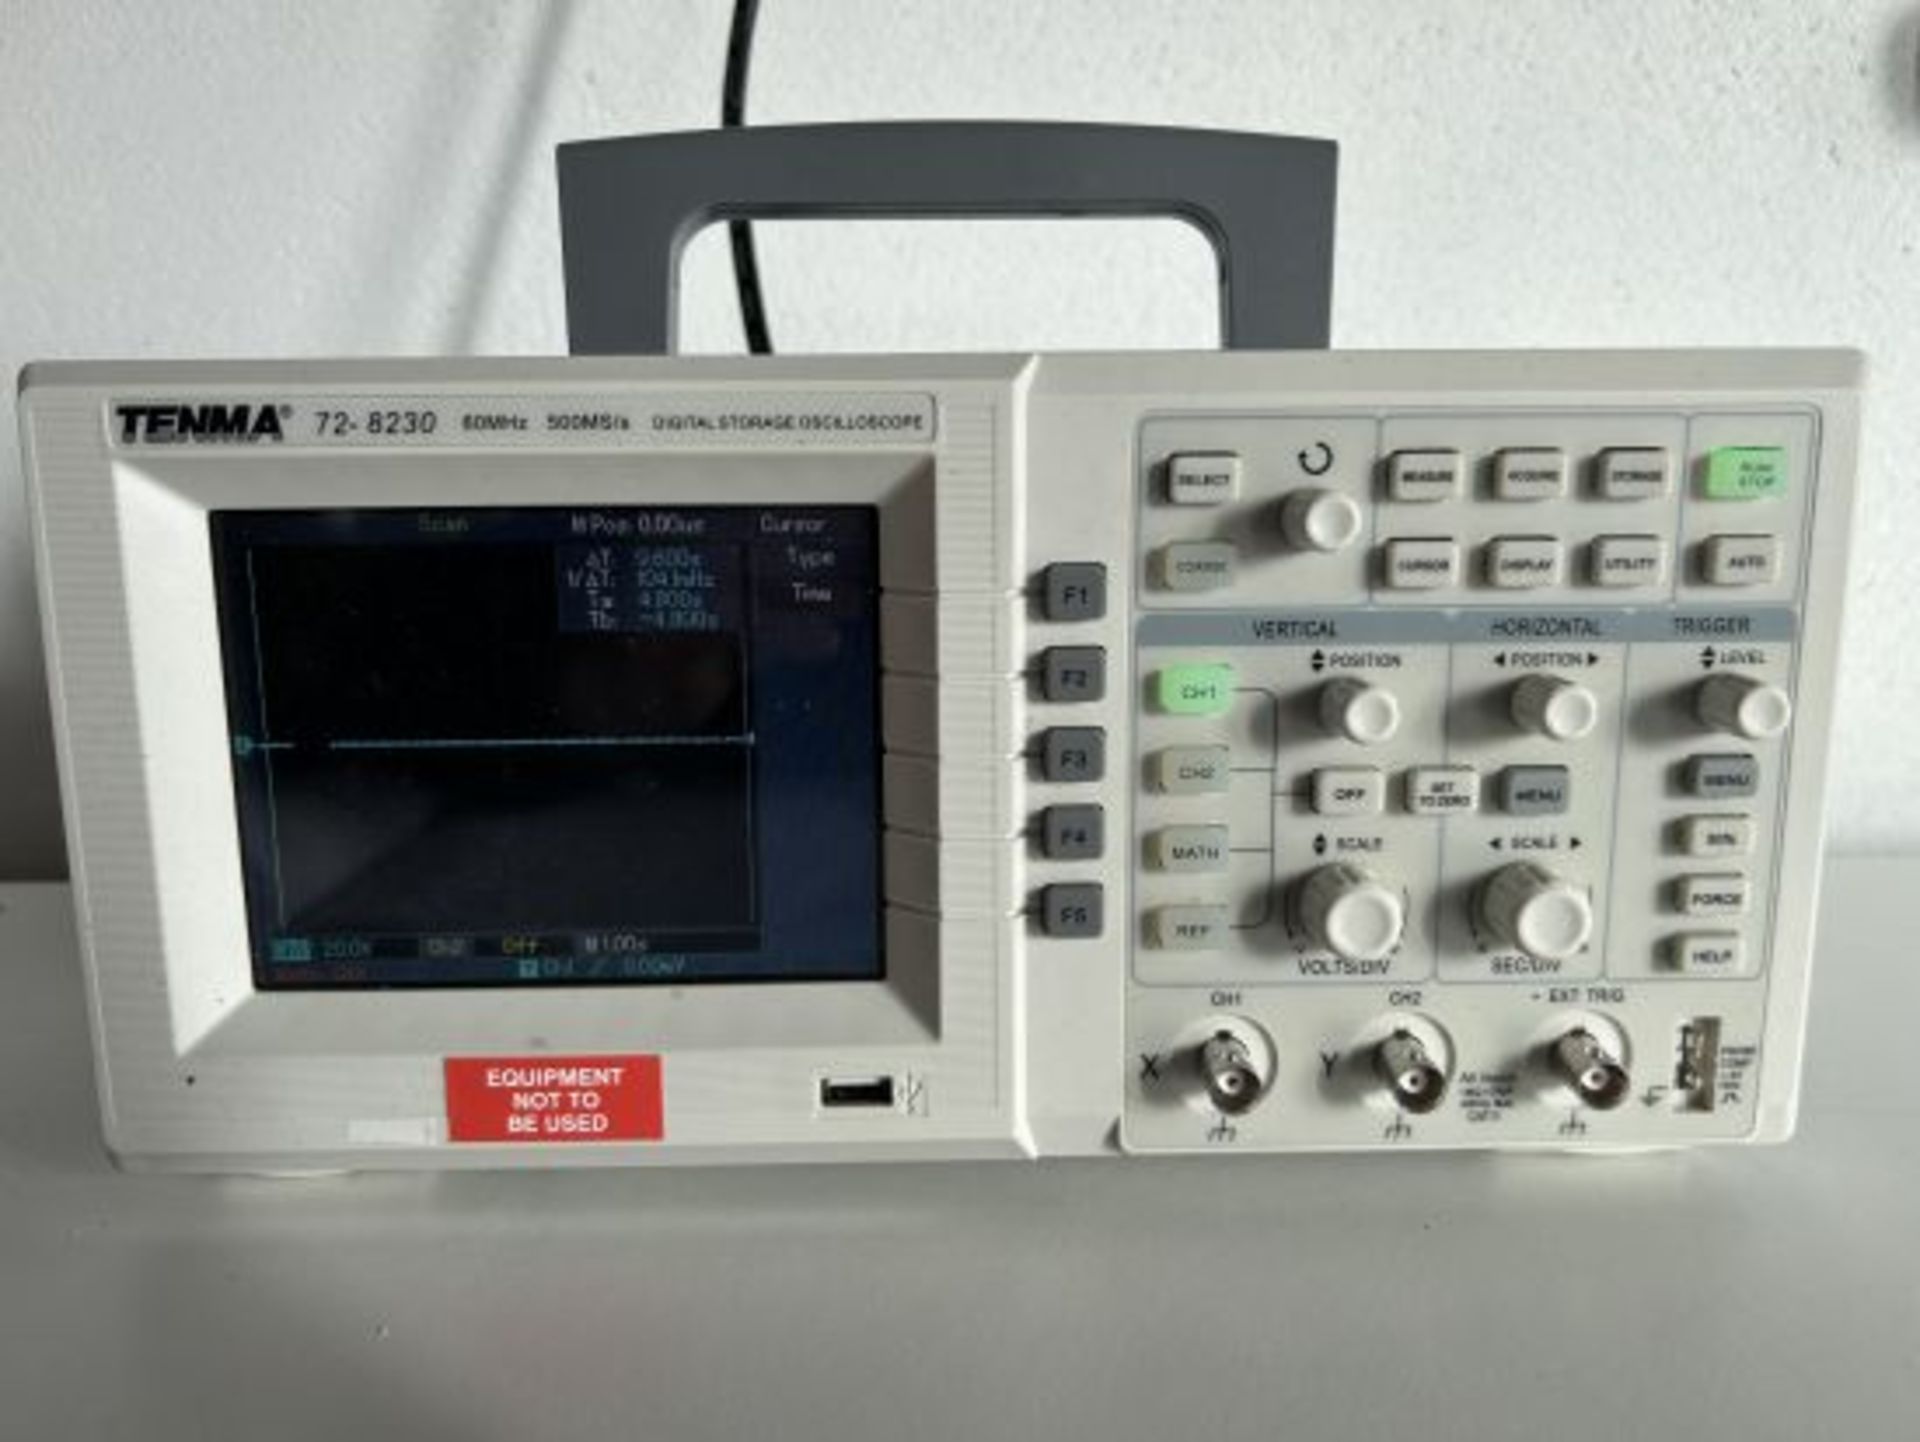 Tenma 72-8230 Digital Storage Oscilloscope, 60MHZ, 500MS/s.